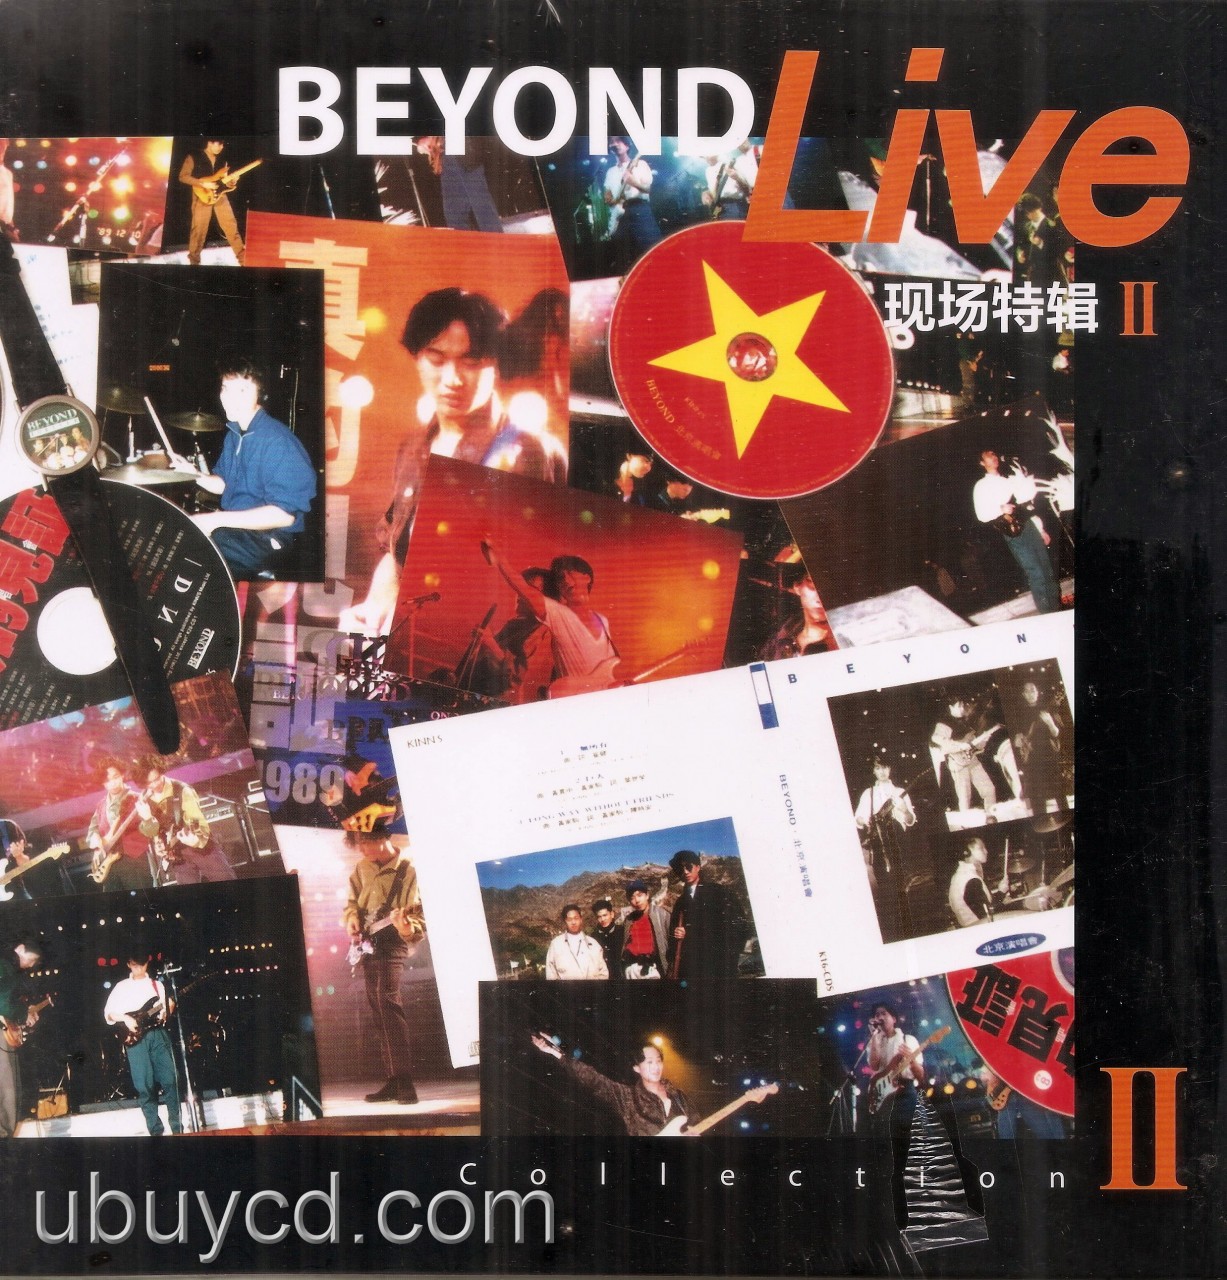 Beyond Live Collection 2 現場特輯2 -3 CD Box Set (全新未開封) - ubuycd